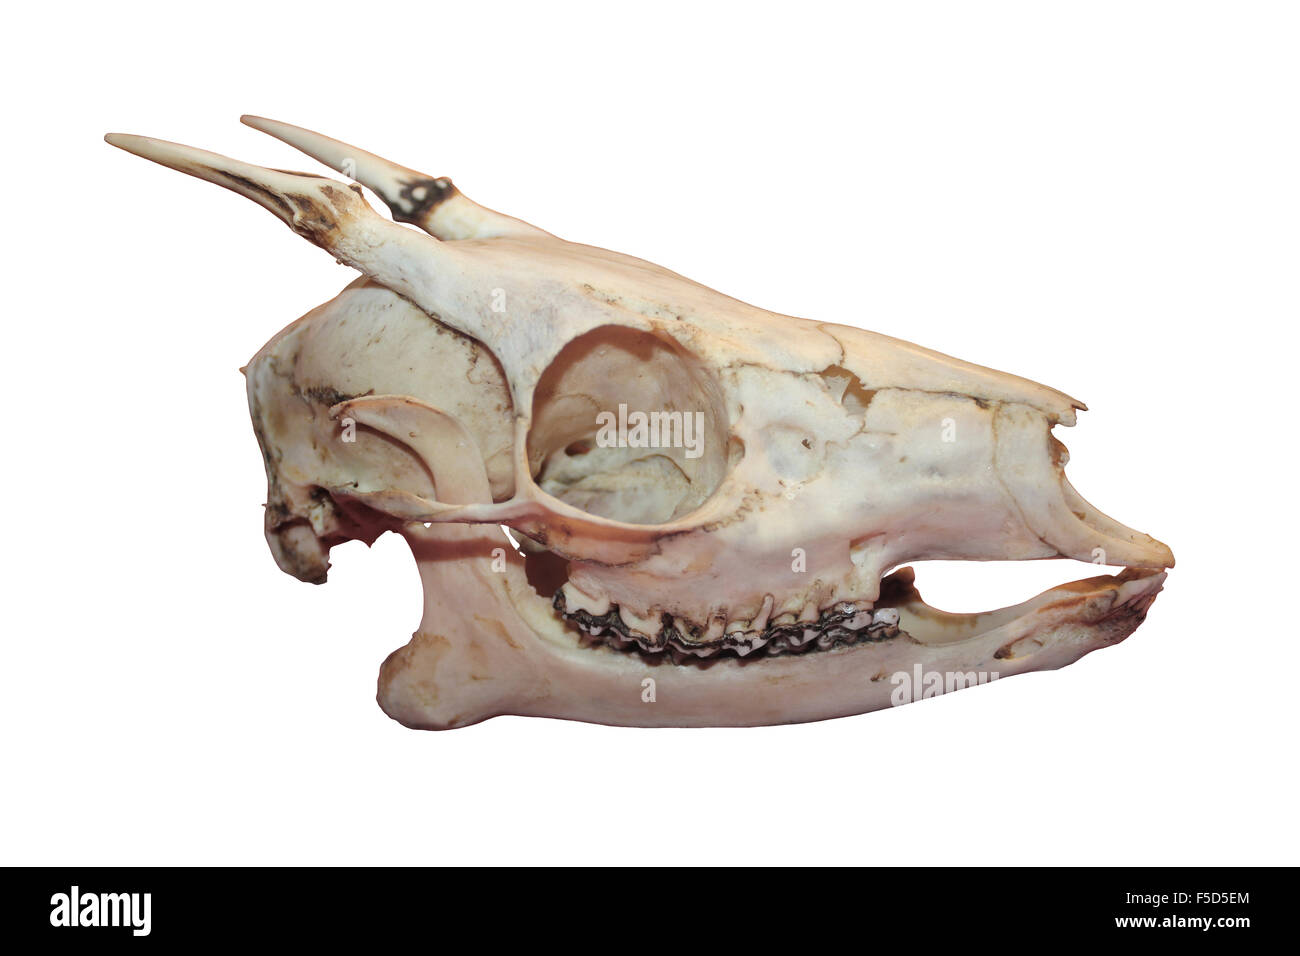 Skull Of Dwarf Brocket Deer (Mazama chunyi) native to the Andean highlands in western Bolivia and south-eastern Peru. Stock Photo